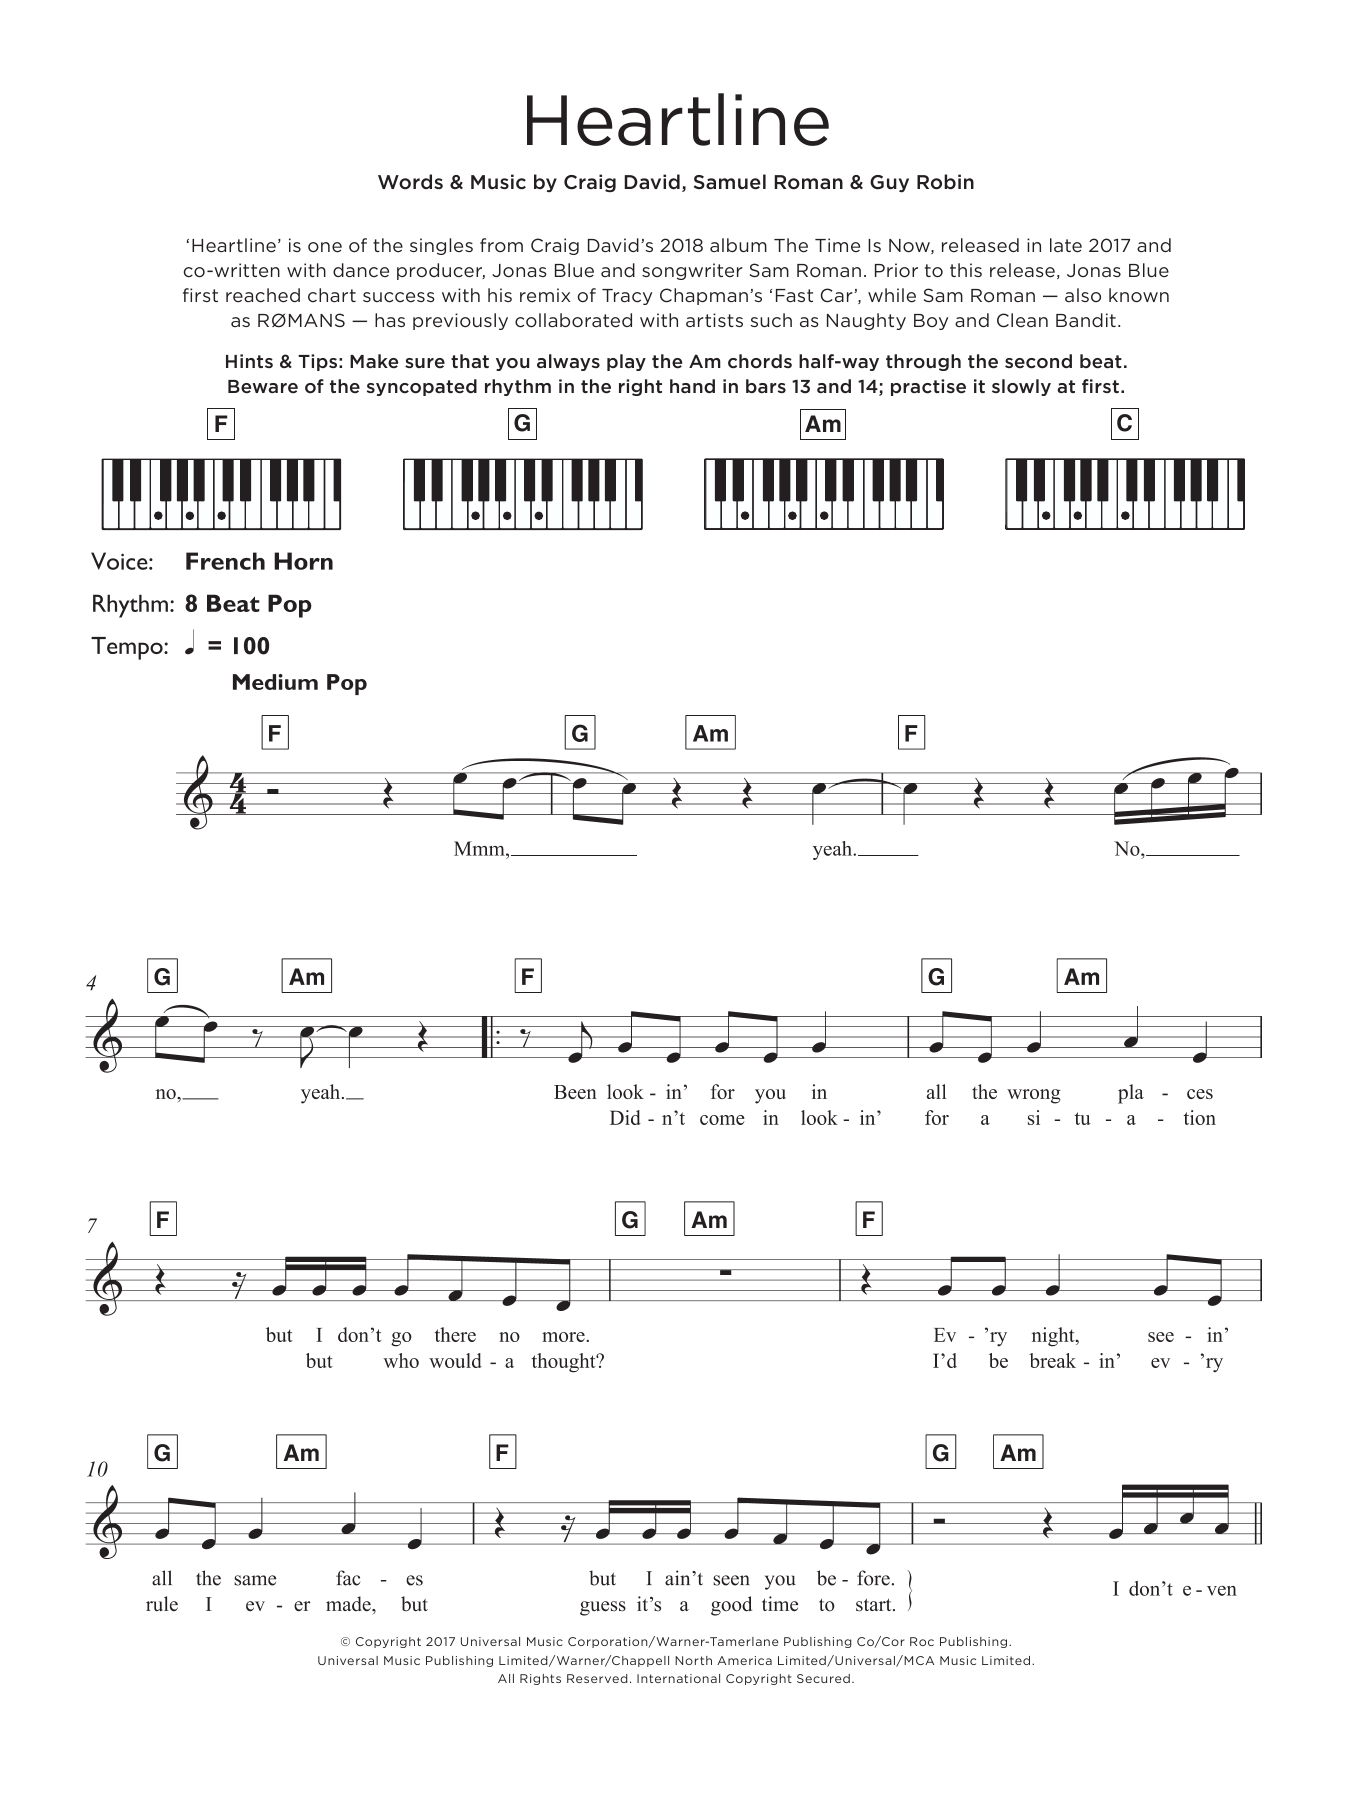 Craig David Heartline Sheet Music Notes & Chords for Keyboard - Download or Print PDF